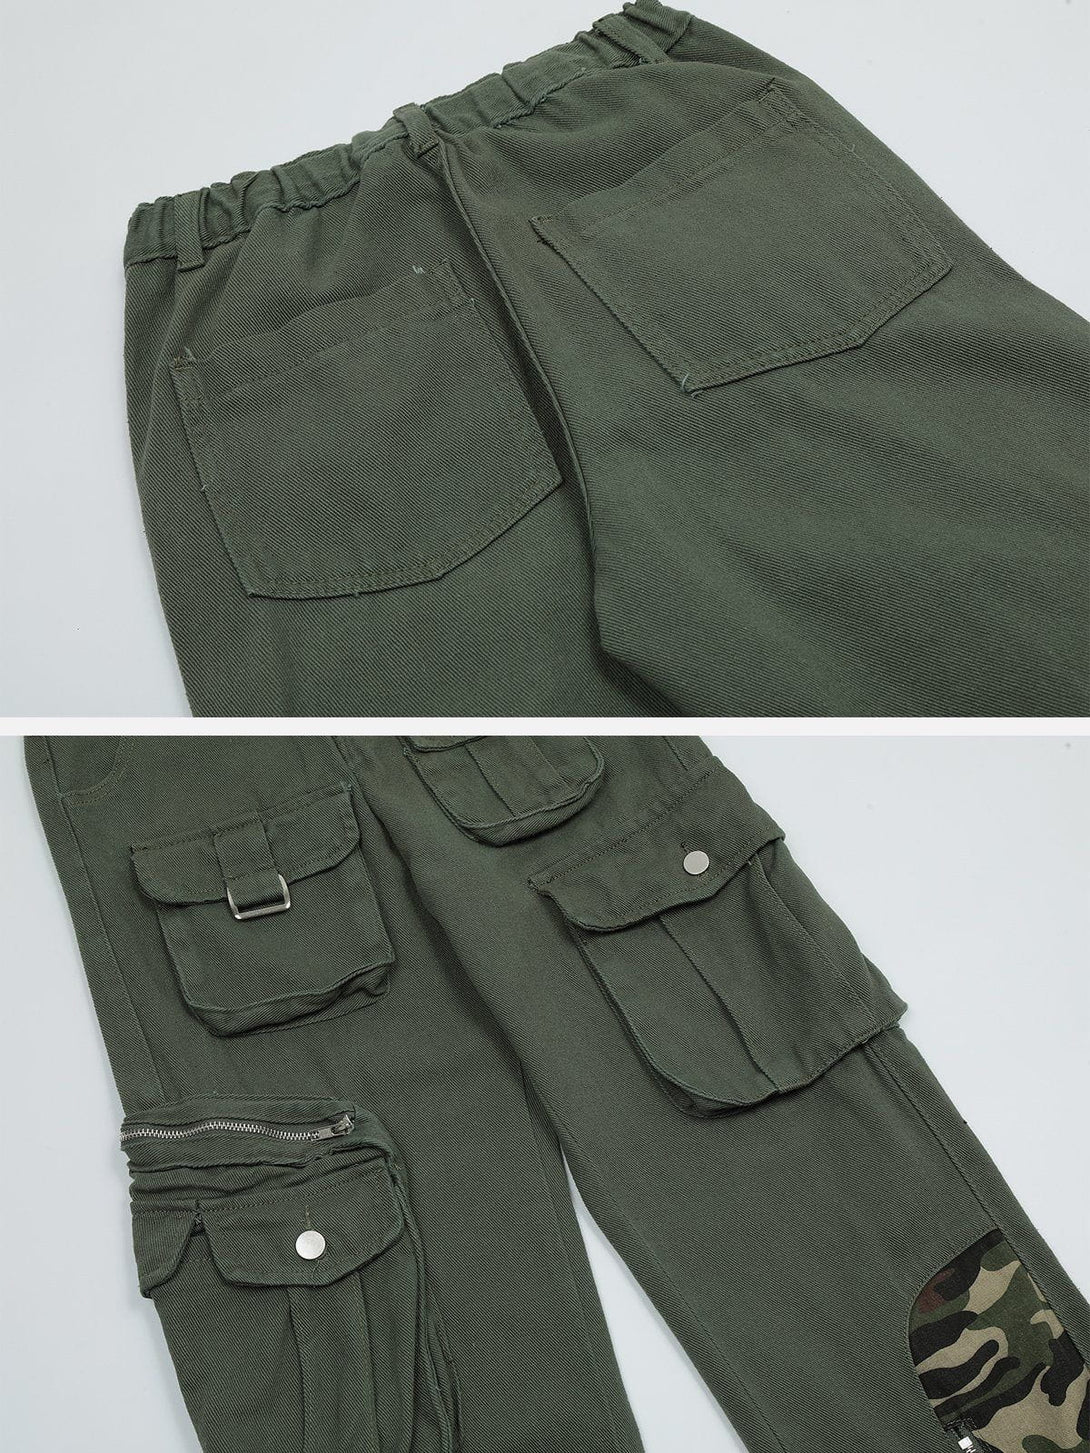 Majesda® - Multi-pocket Cargo Pants outfit ideas streetwear fashion